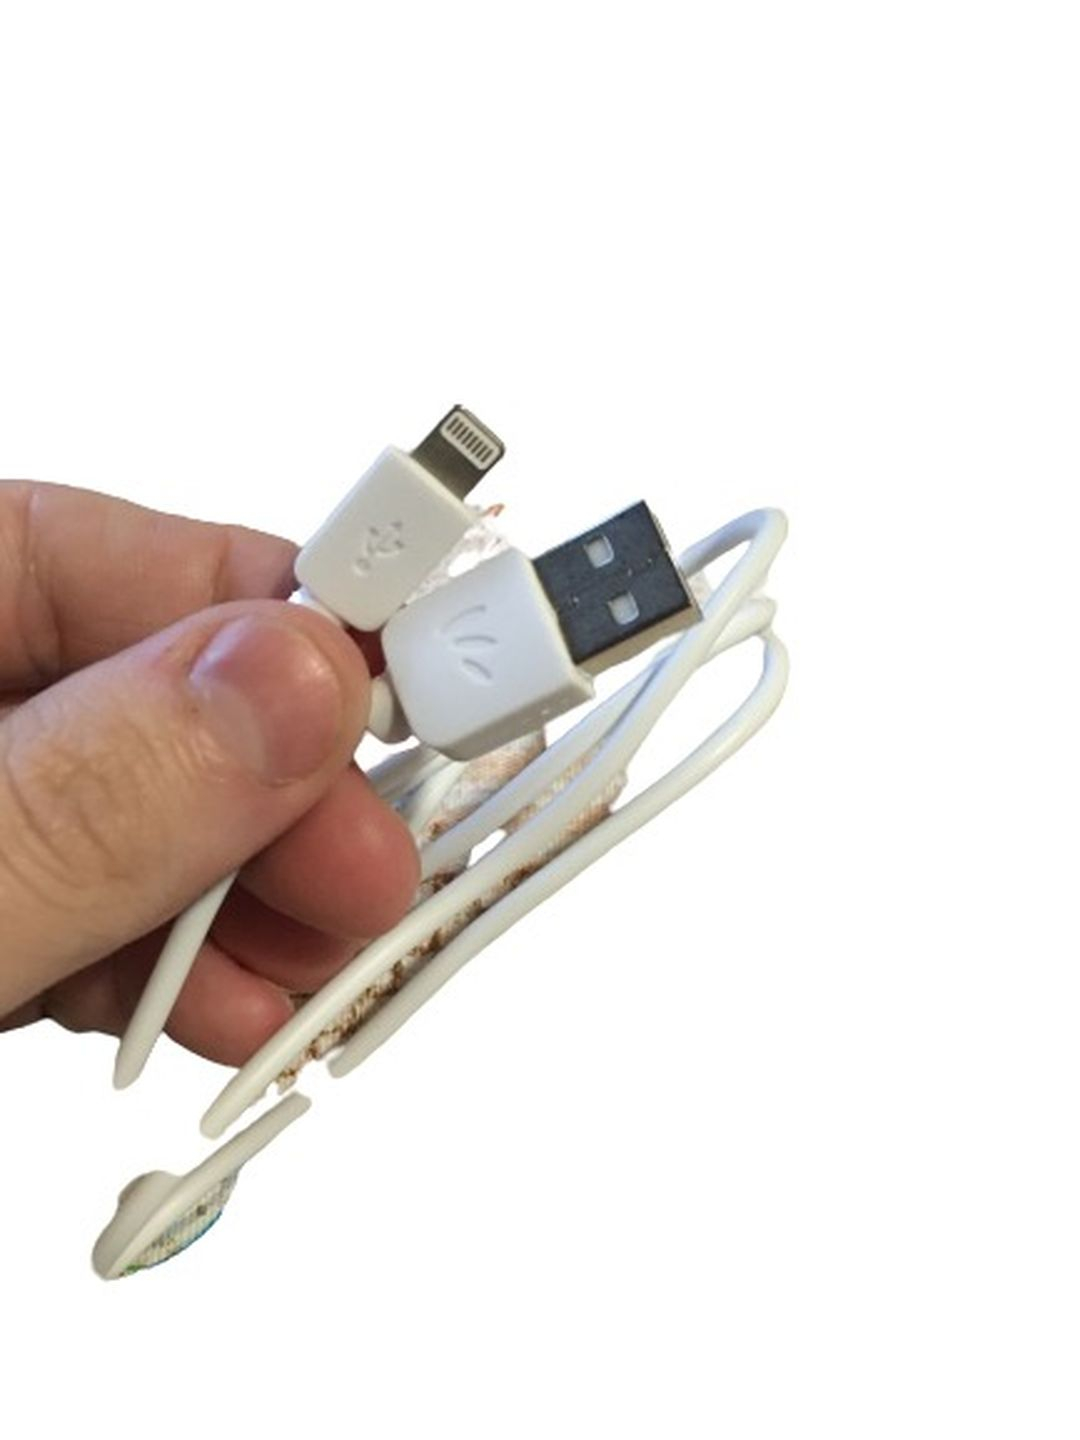 Зарядный провод USB для iPhone 5, 6, 7, 8, X, 11, iPad Mini, iPad Air  купить по цене 65 ₽ в интернет-магазине KazanExpress